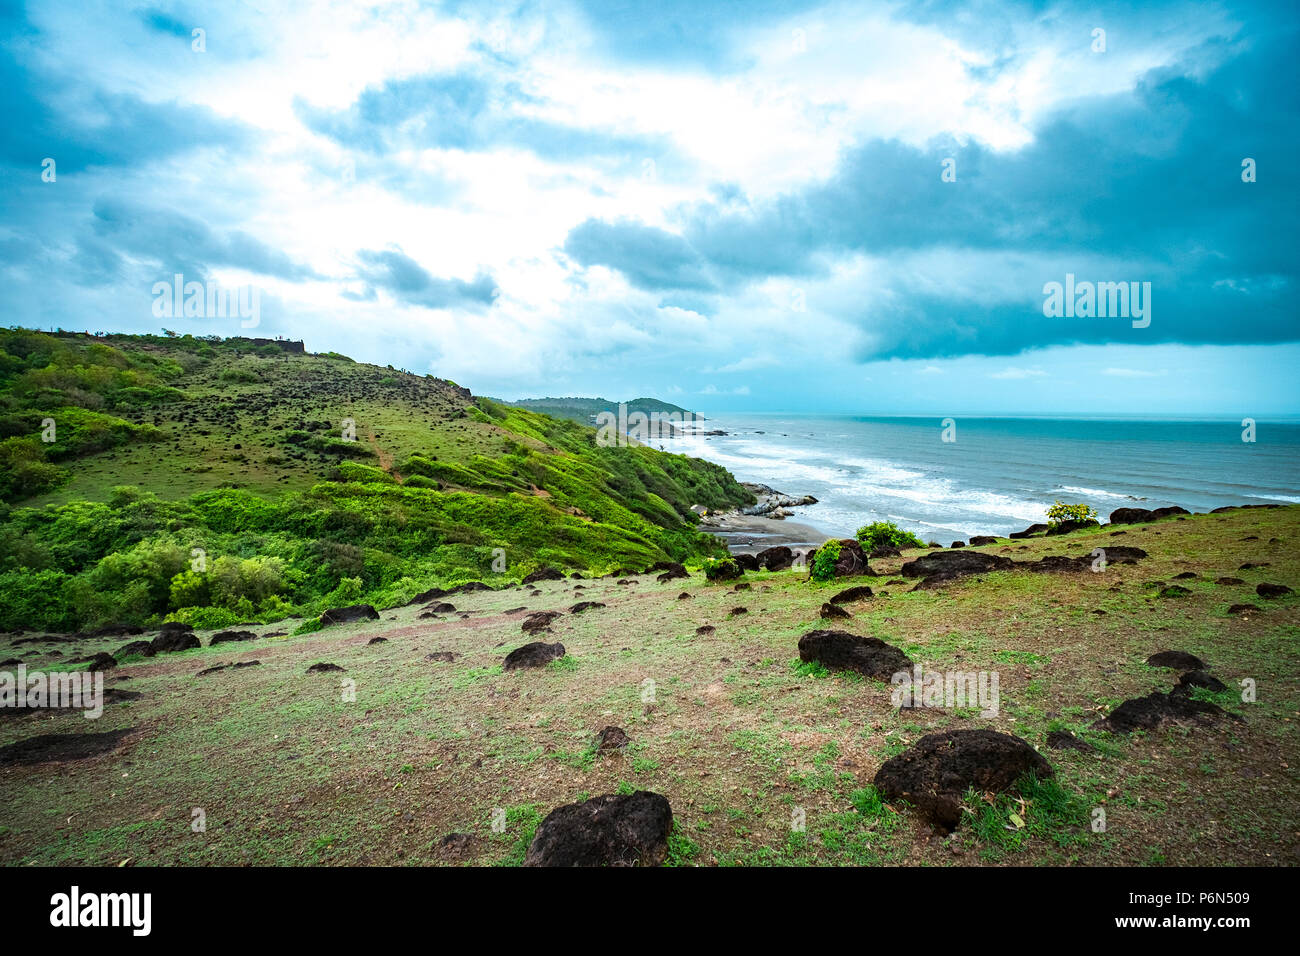 Landscape at Vagator beach in Goa, India Stock Photo